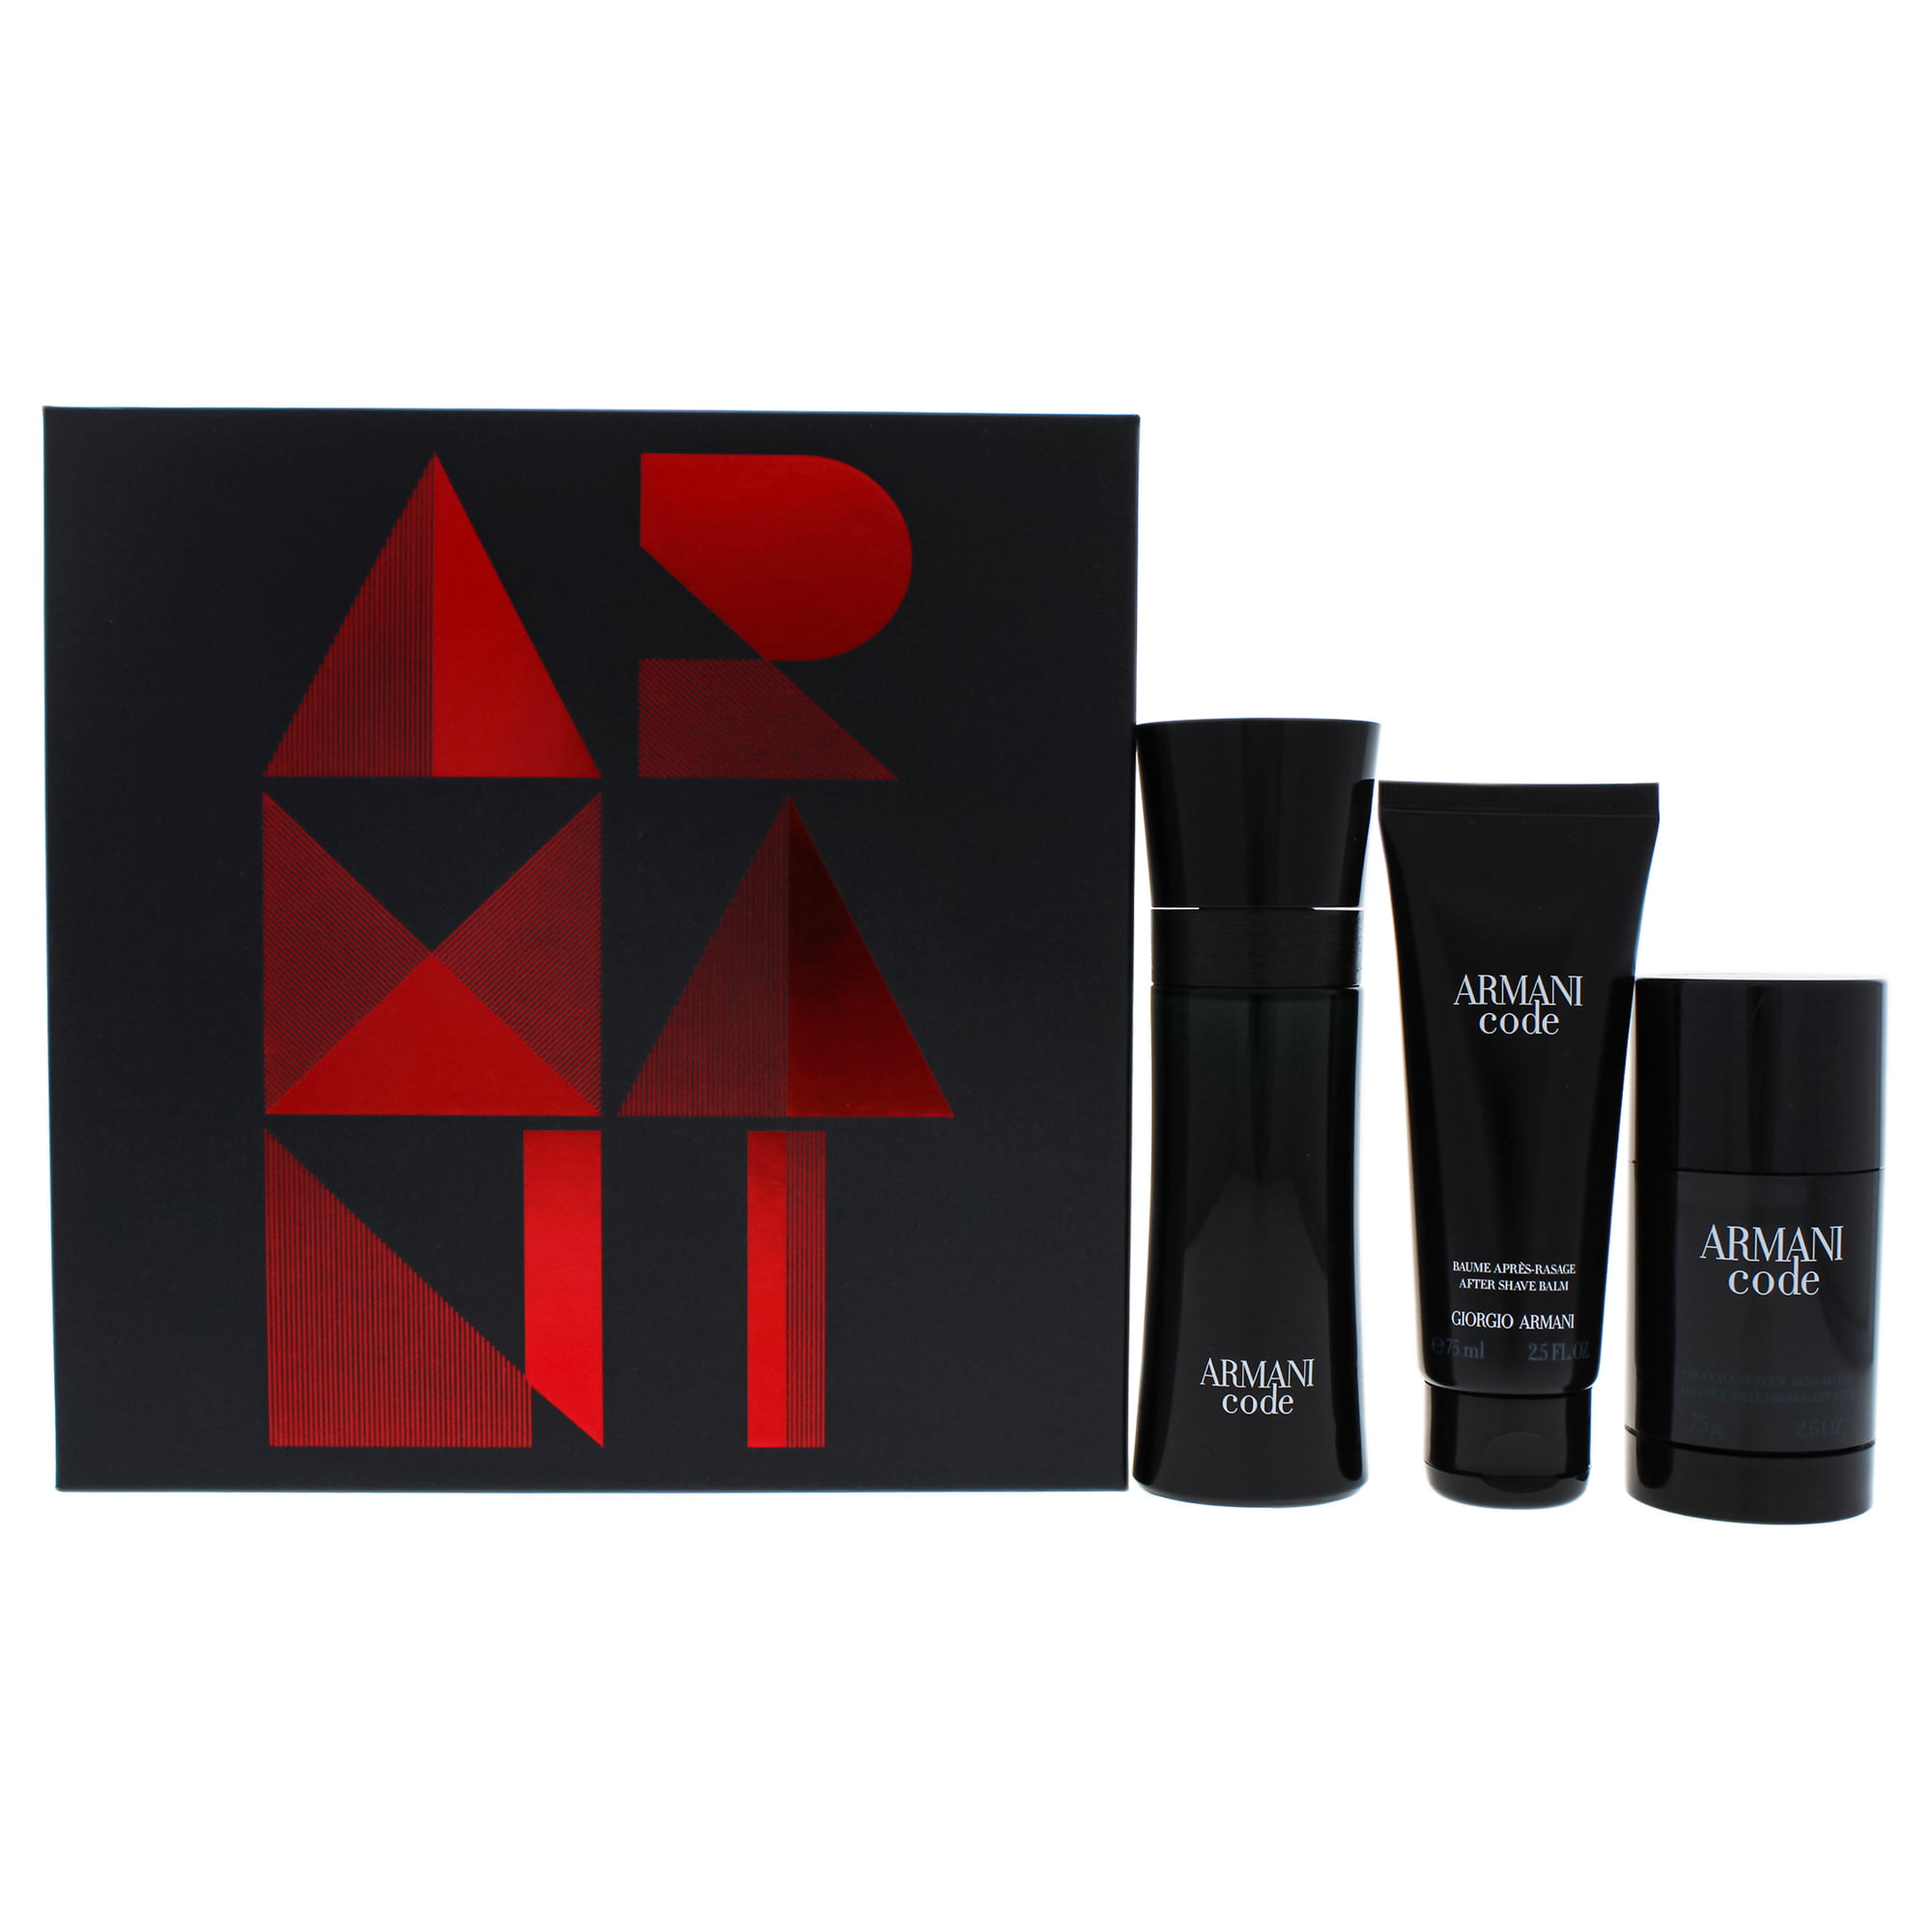 Giorgio Armani Armani Code EDT Gift Set - Cosmetics 